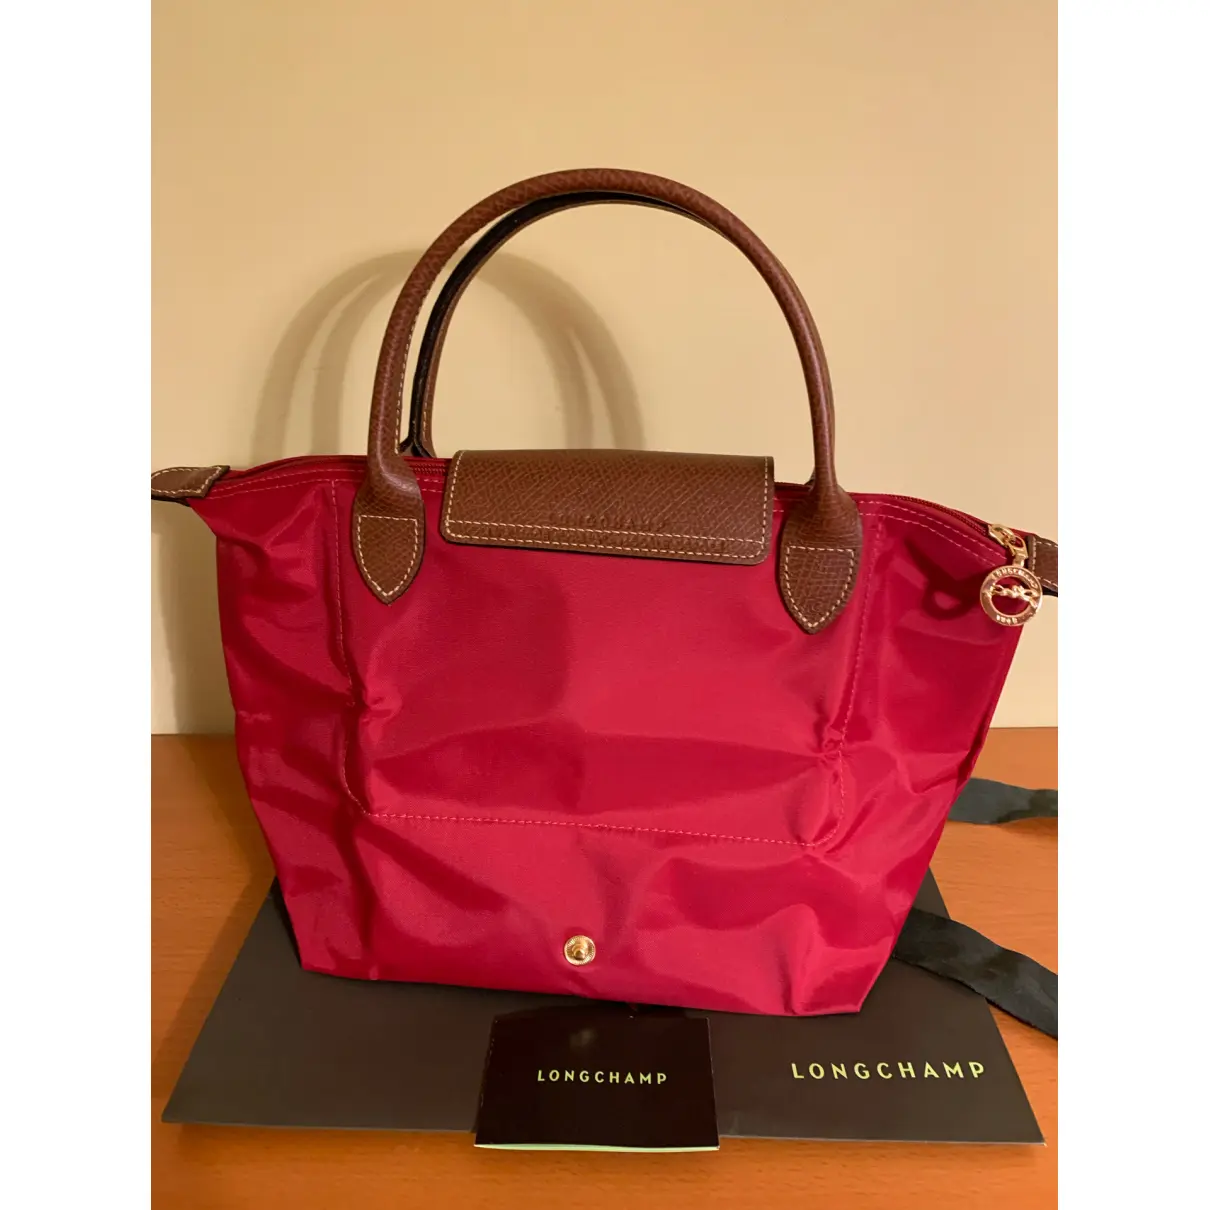 Buy Longchamp Pliage handbag online